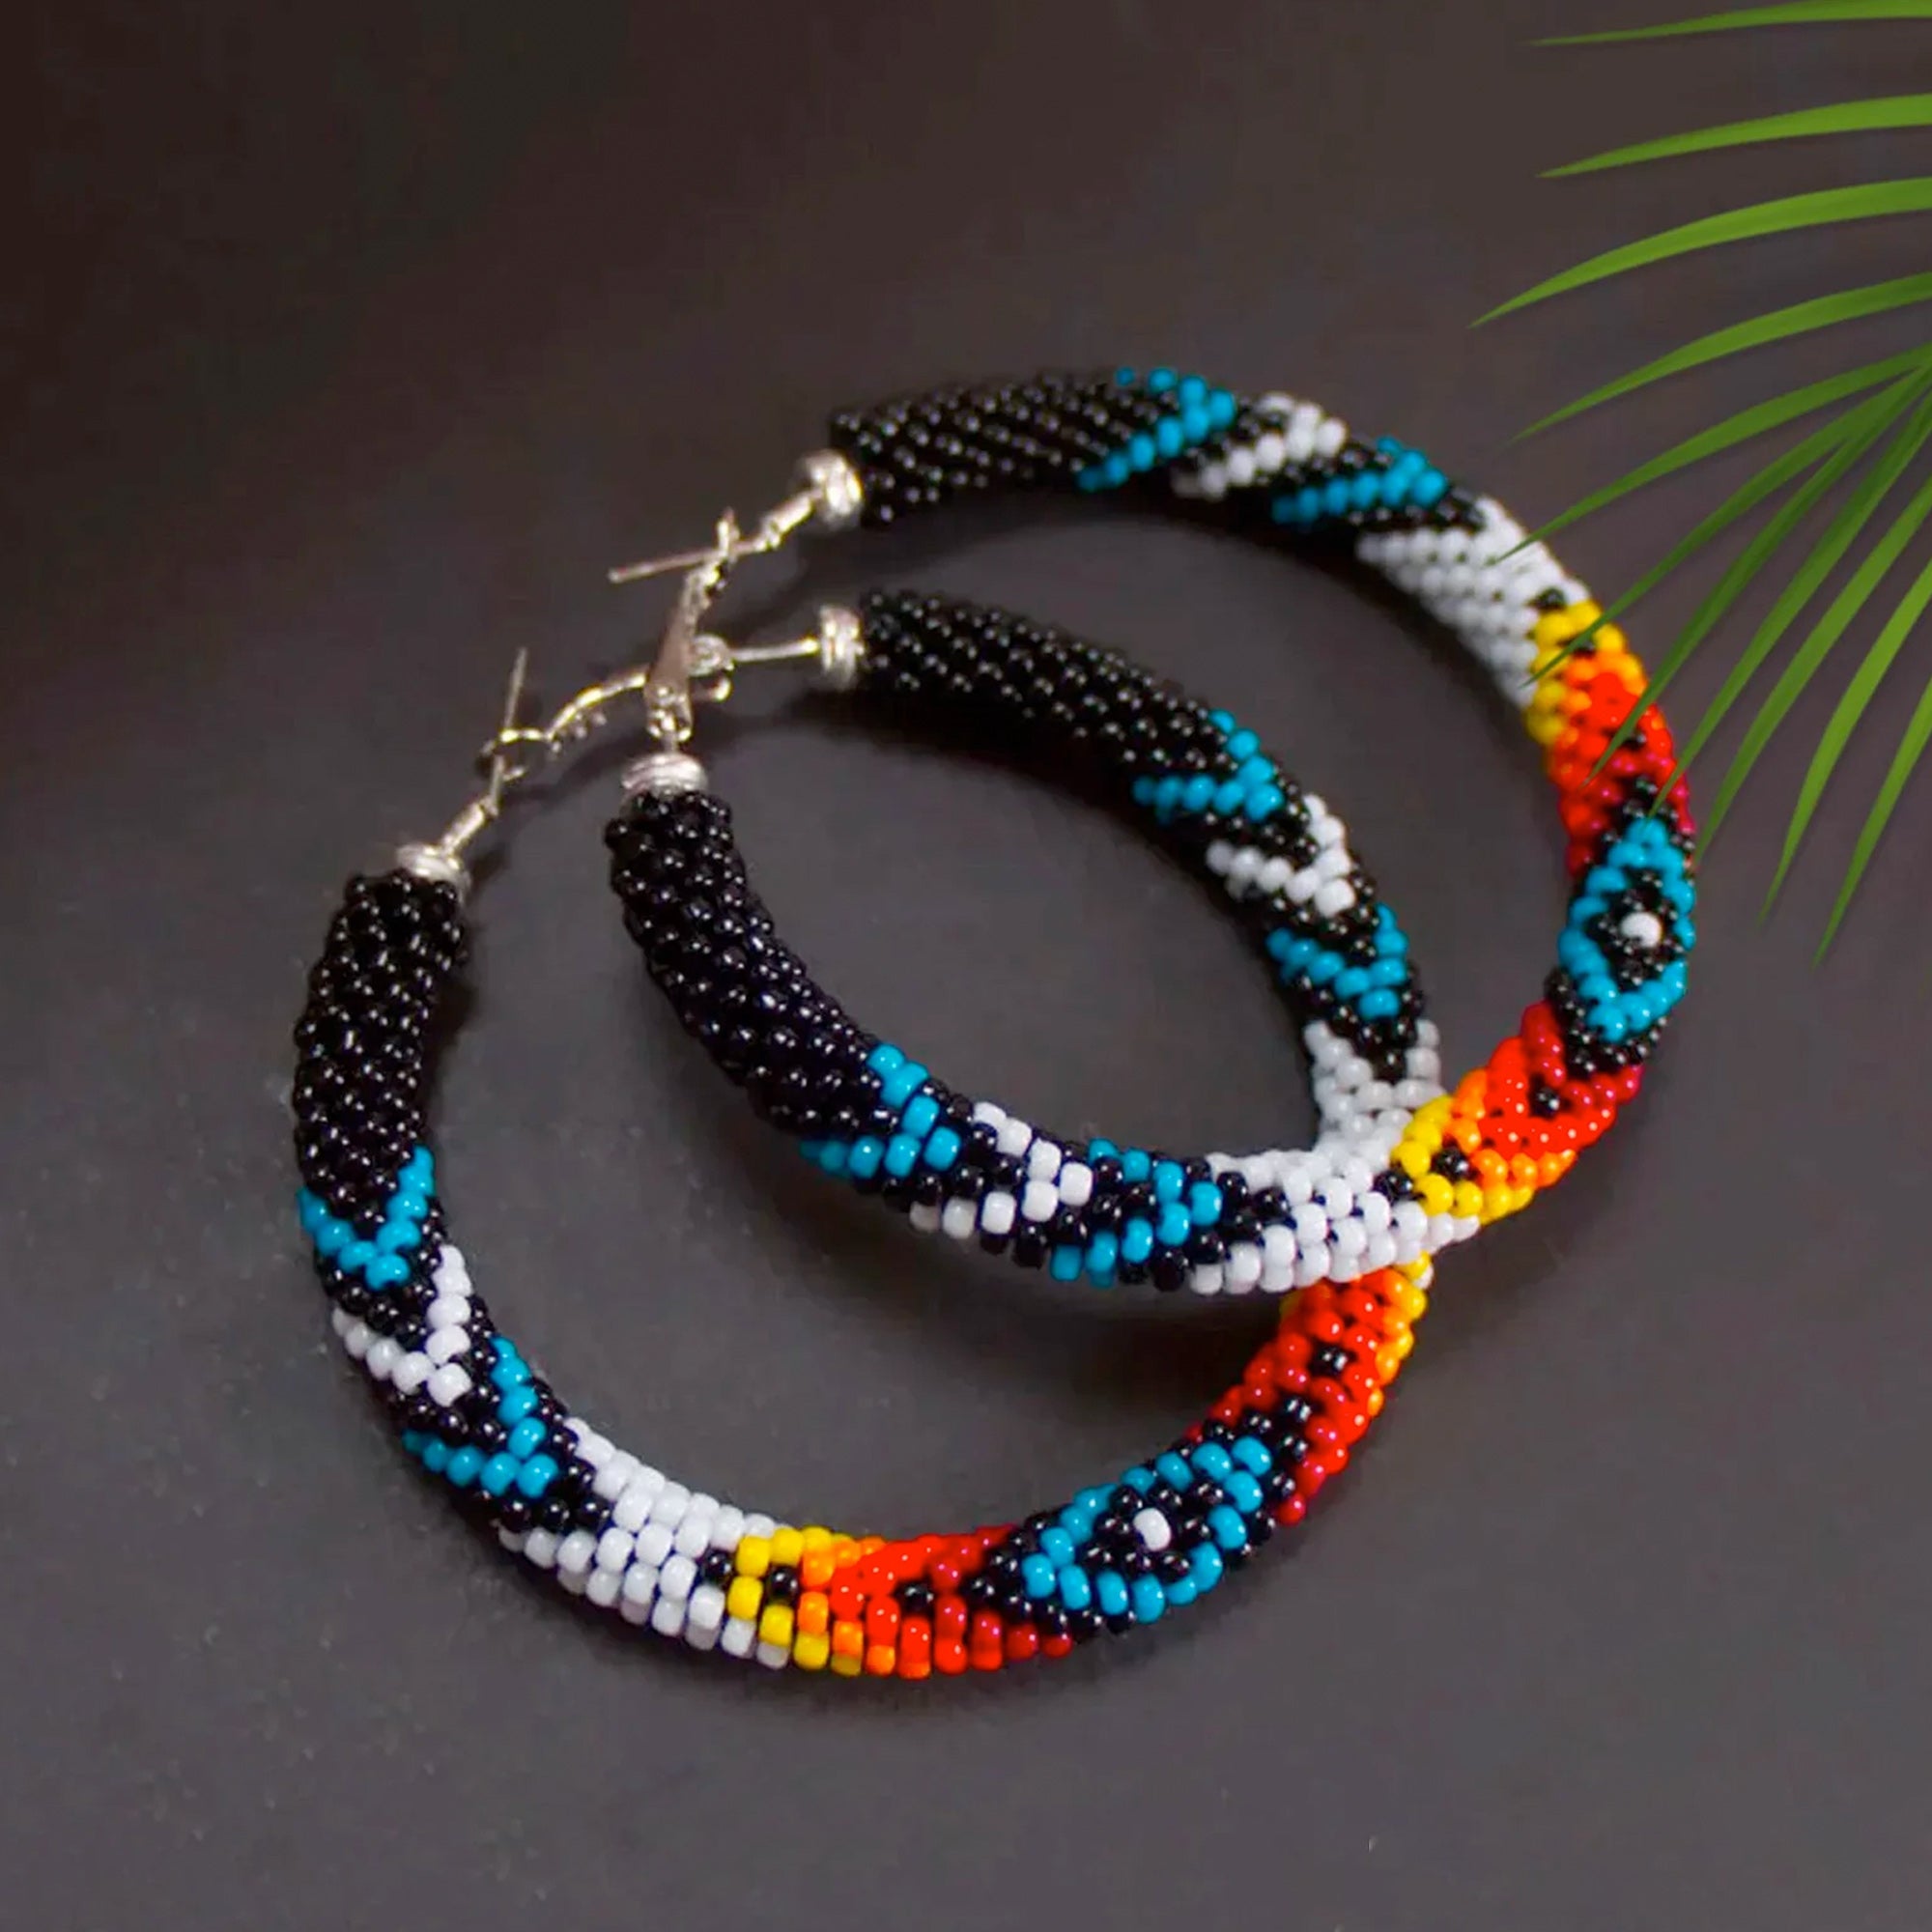 SALE 50% OFF - Black Dusk Pattern Beaded Handmade Earrings For Women